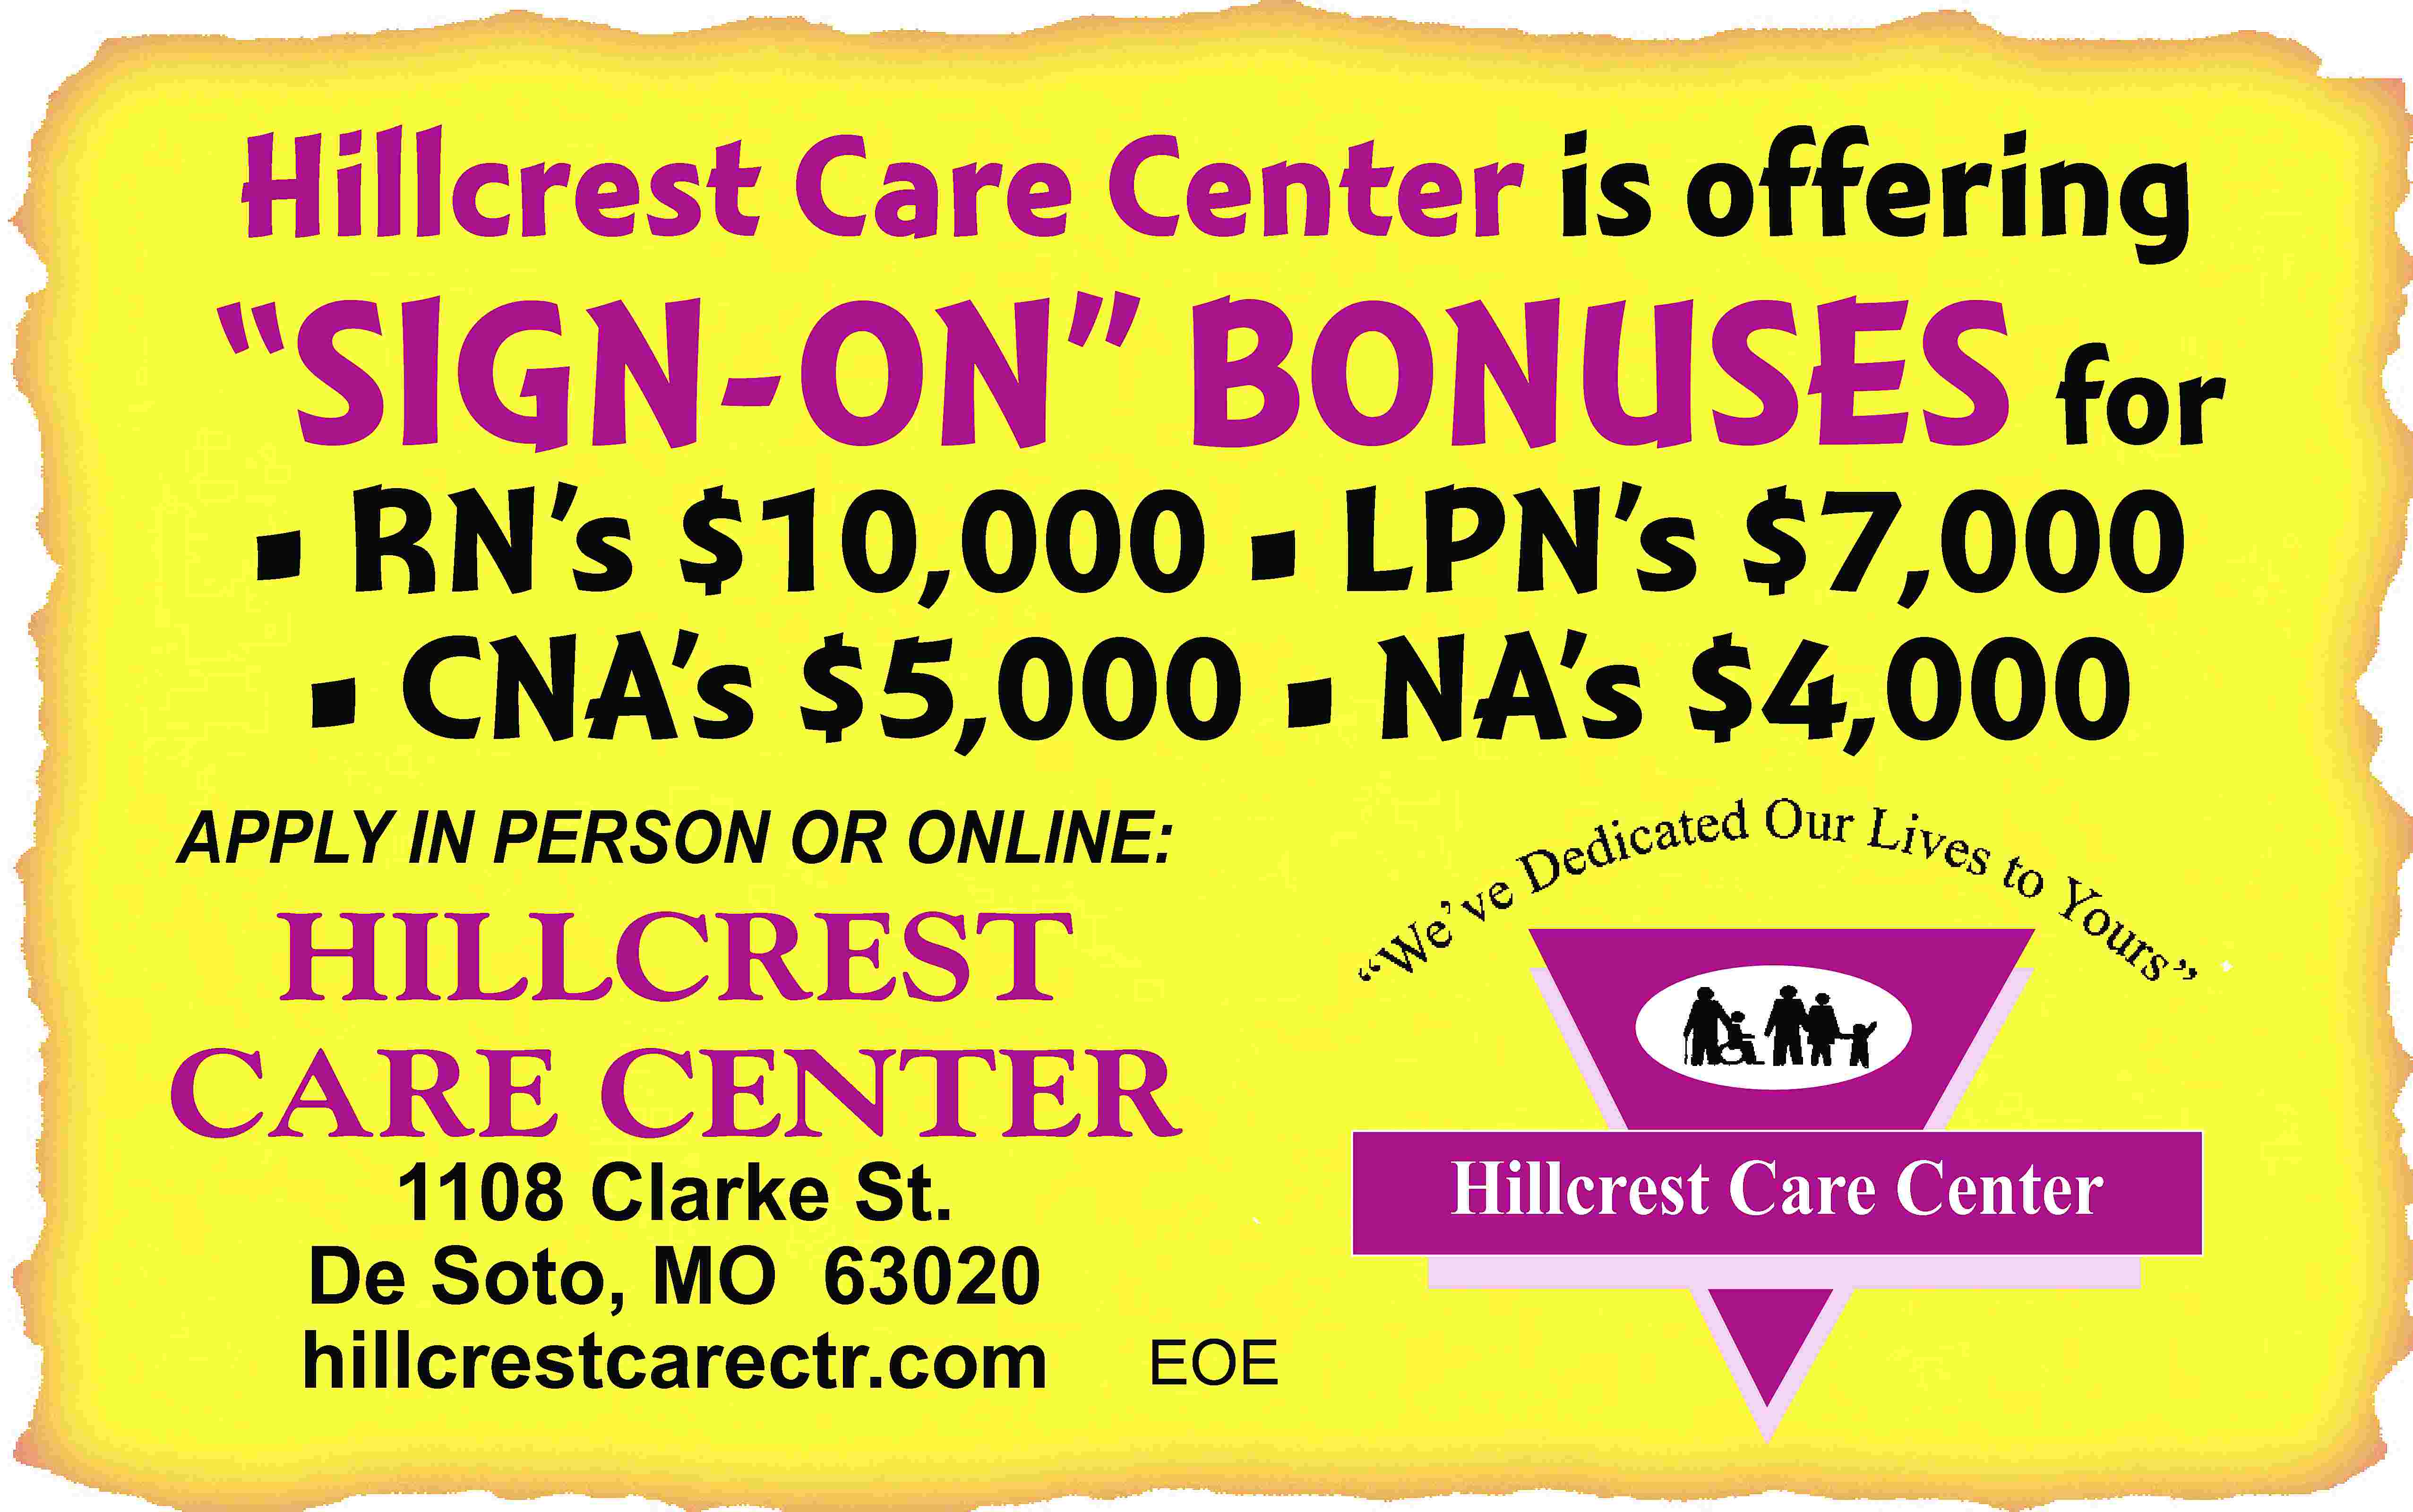 Hillcrest Care Center is offering  Hillcrest Care Center is offering “SIGN-ON” BONUSES for • RN’s $10,000 • LPN’s $7,000 • CNA’s $5,000 • NA’s $4,000 APPLY IN PERSON OR ONLINE: HILLCREST CARE CENTER 1108 Clarke St. De Soto, MO 63020 hillcrestcarectr.com EOE Hillcrest Care Center